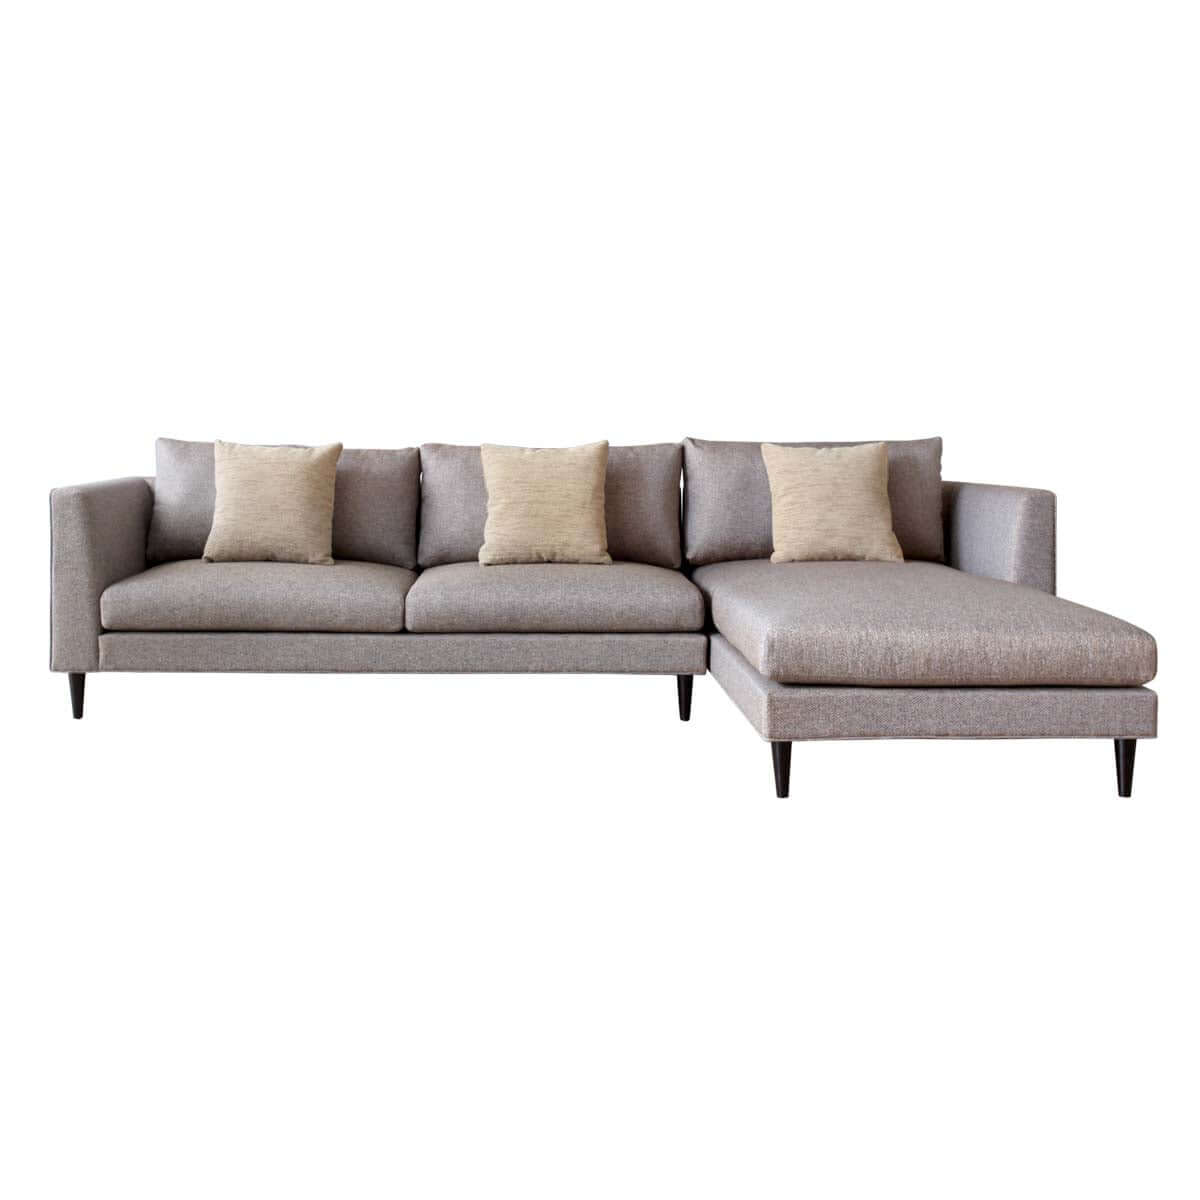 Slimline L-shape 3-seat sofa, simple and chic sofa